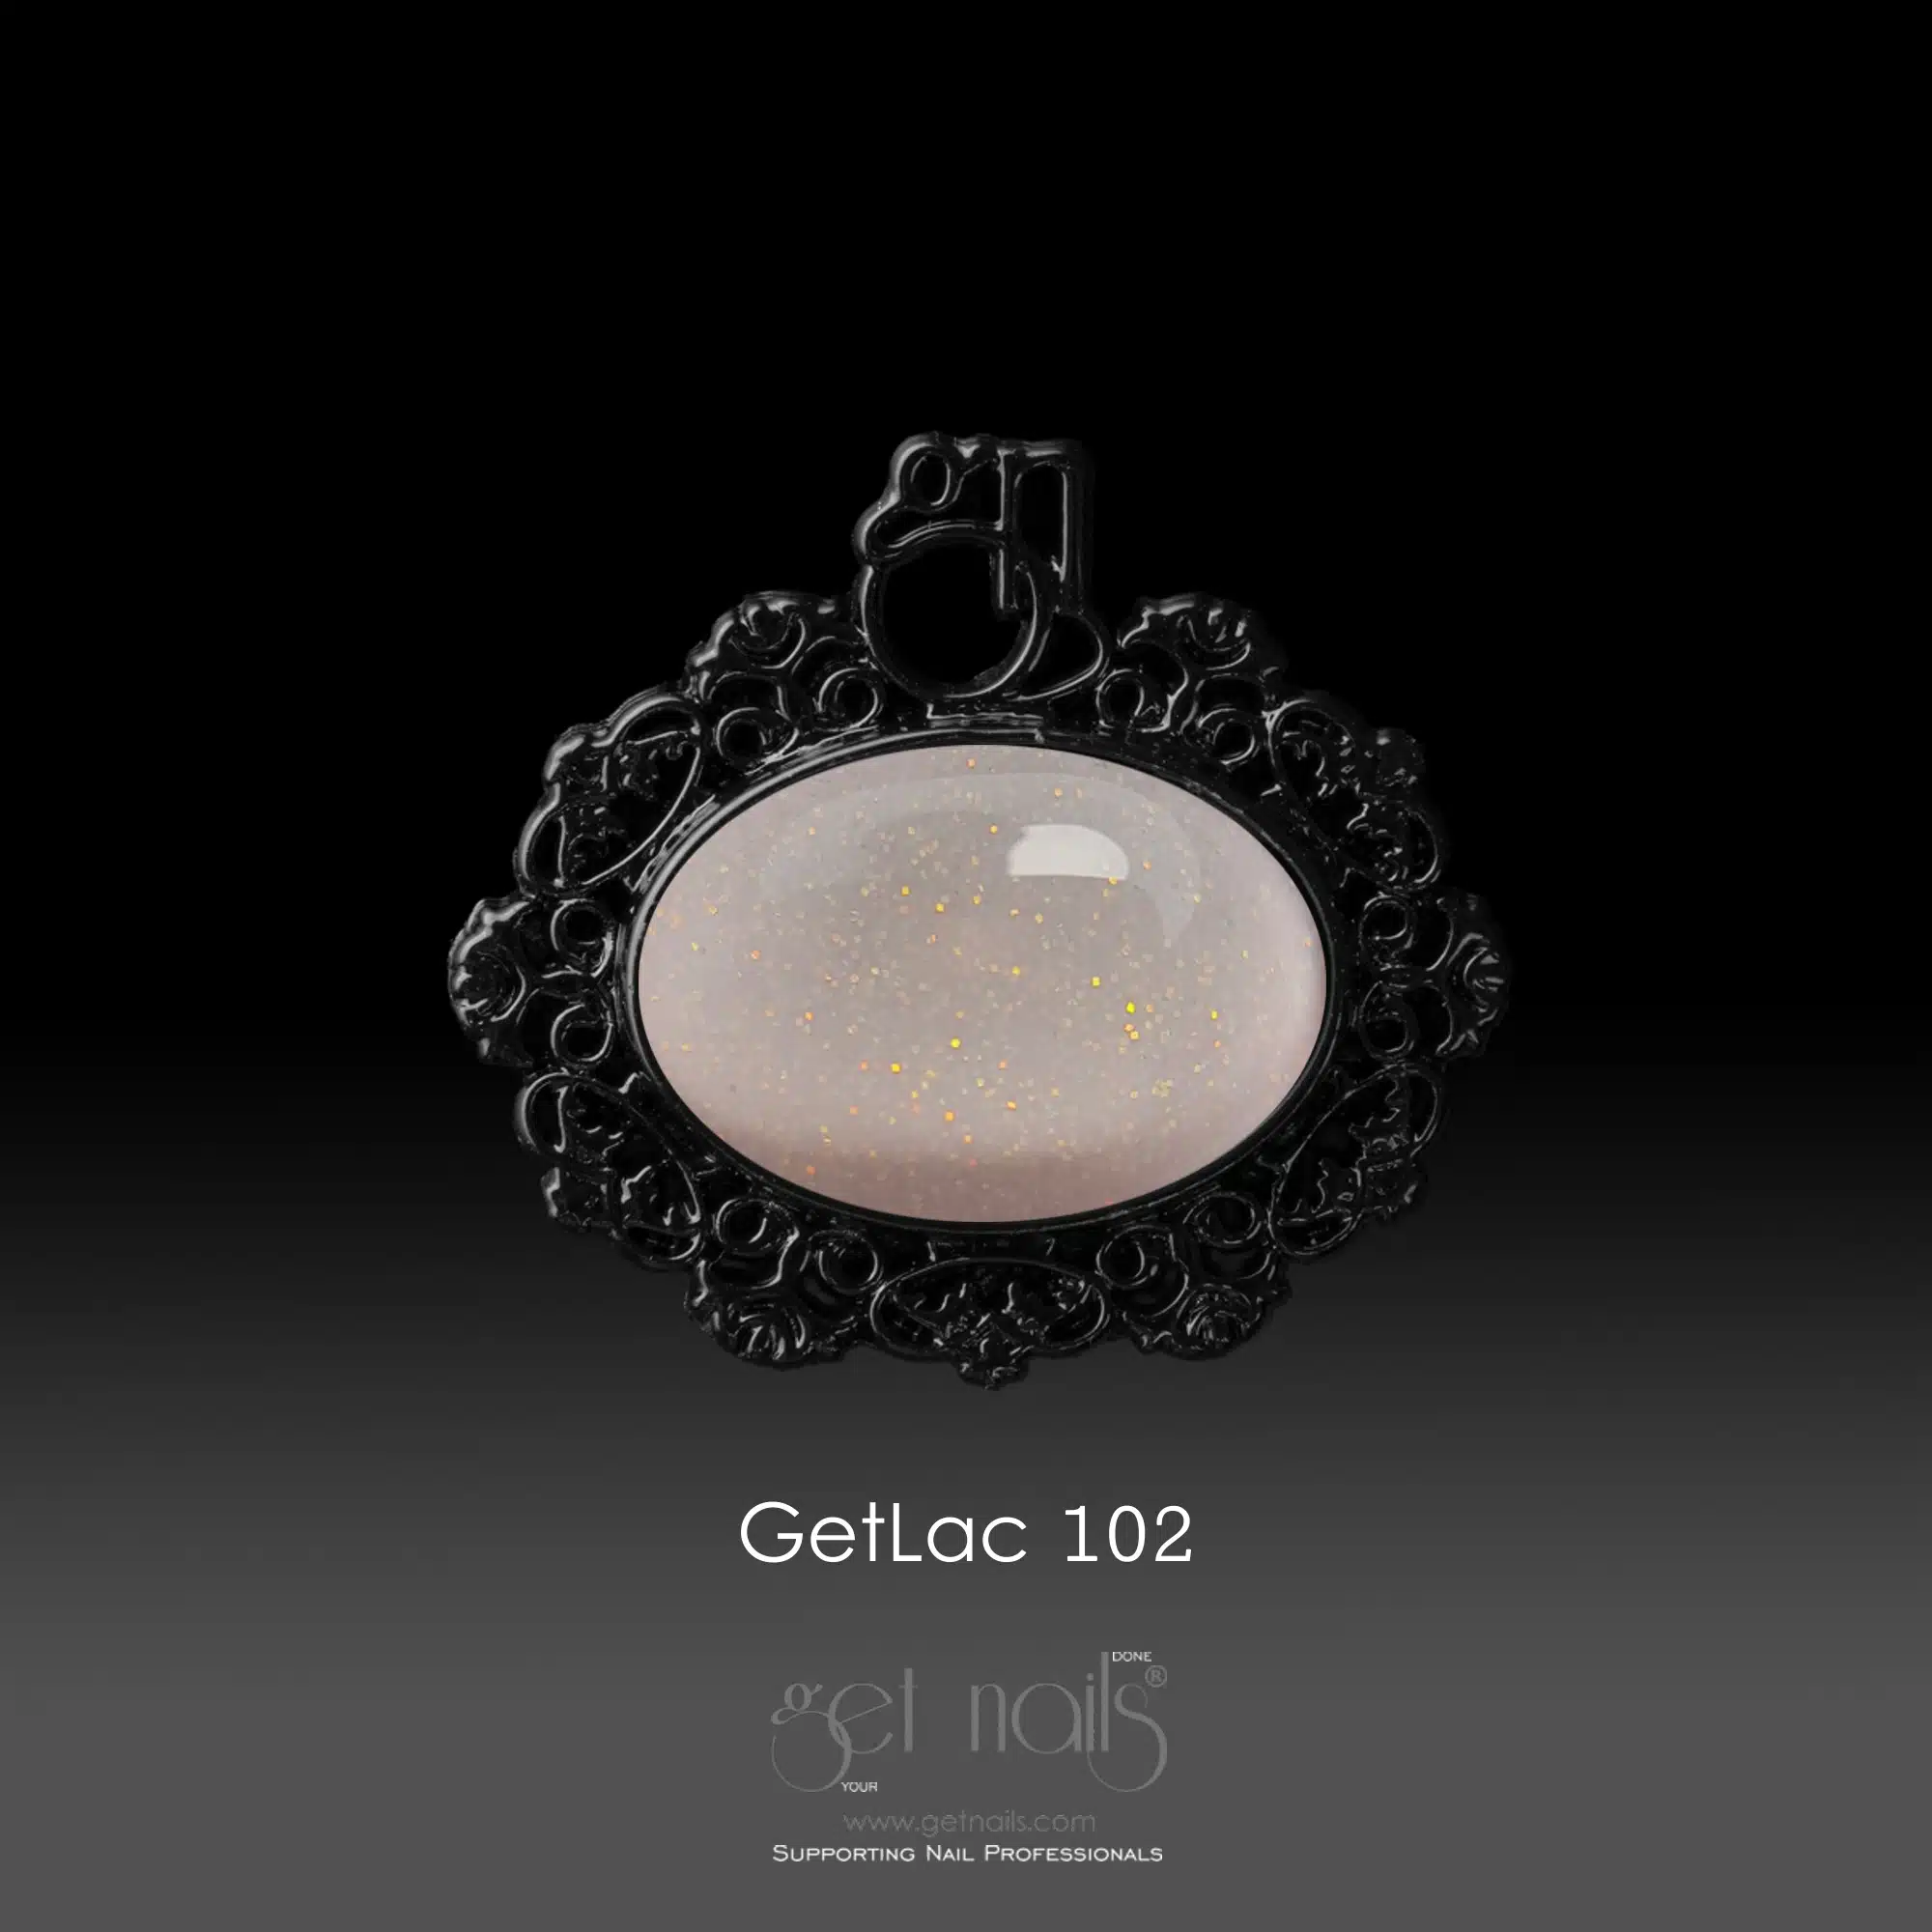 Get Nails Austria - GetLac 102 15g